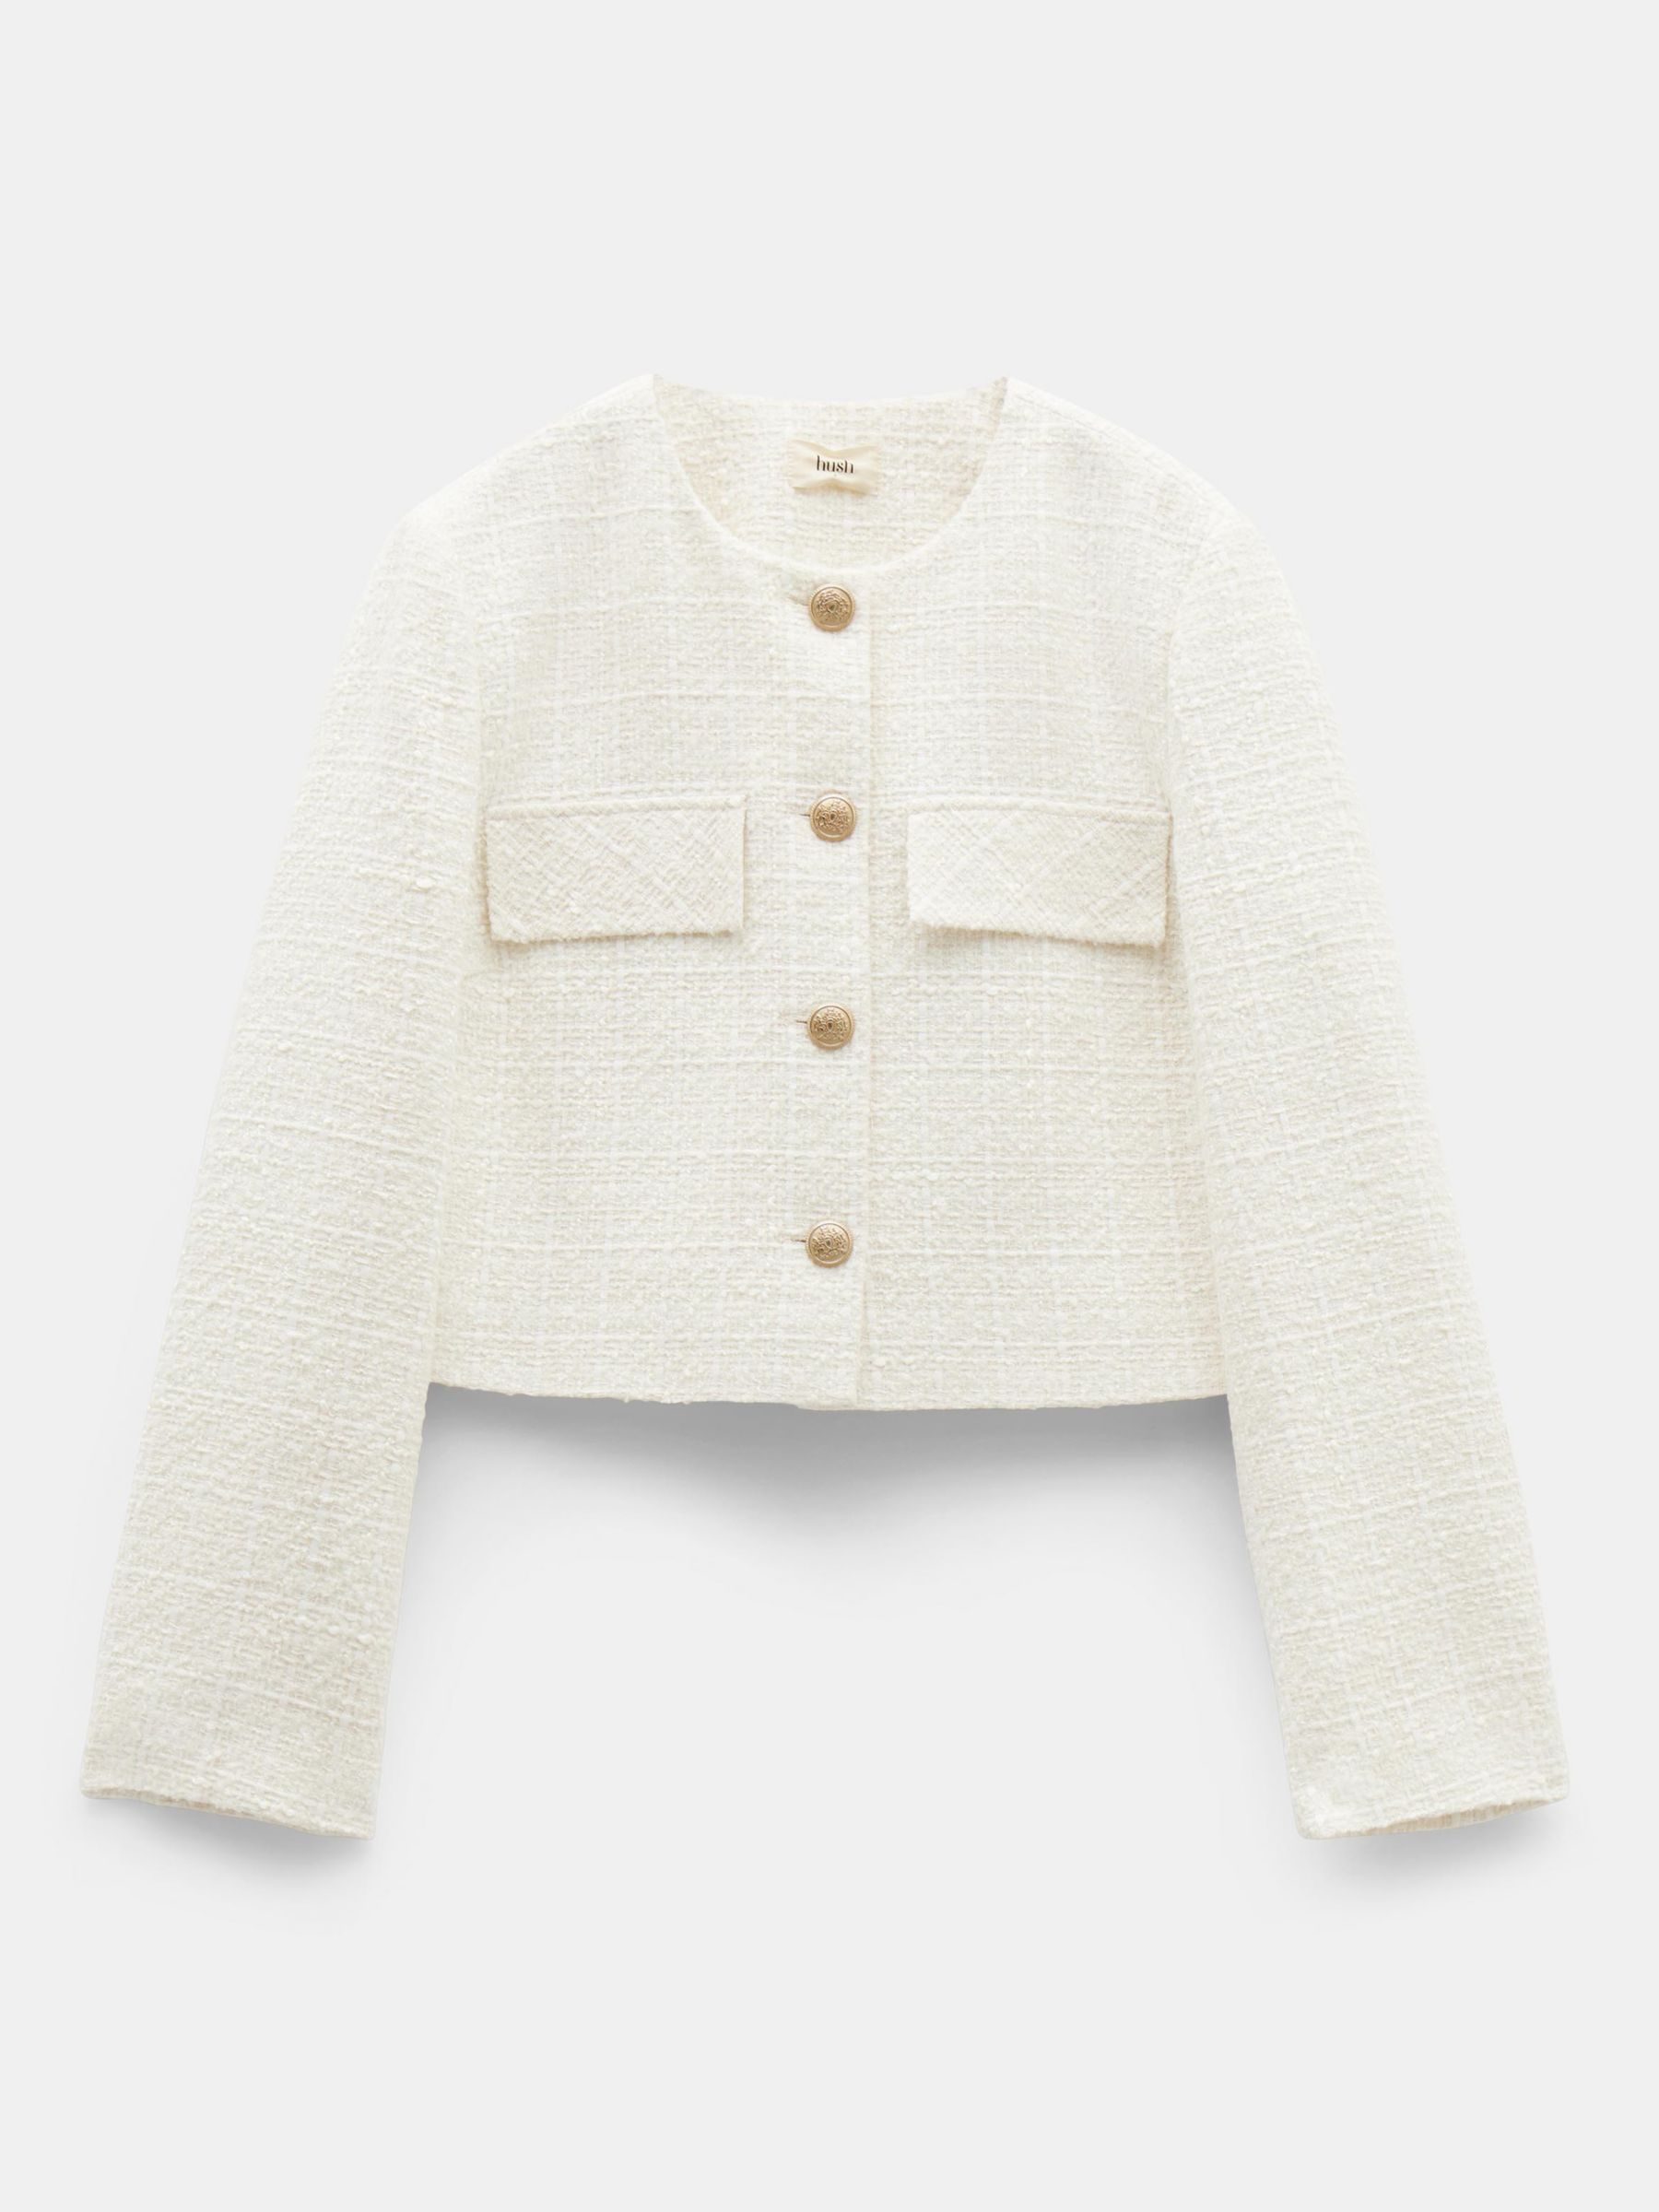 HUSH Esti Cropped Boucle Jacket, White at John Lewis & Partners